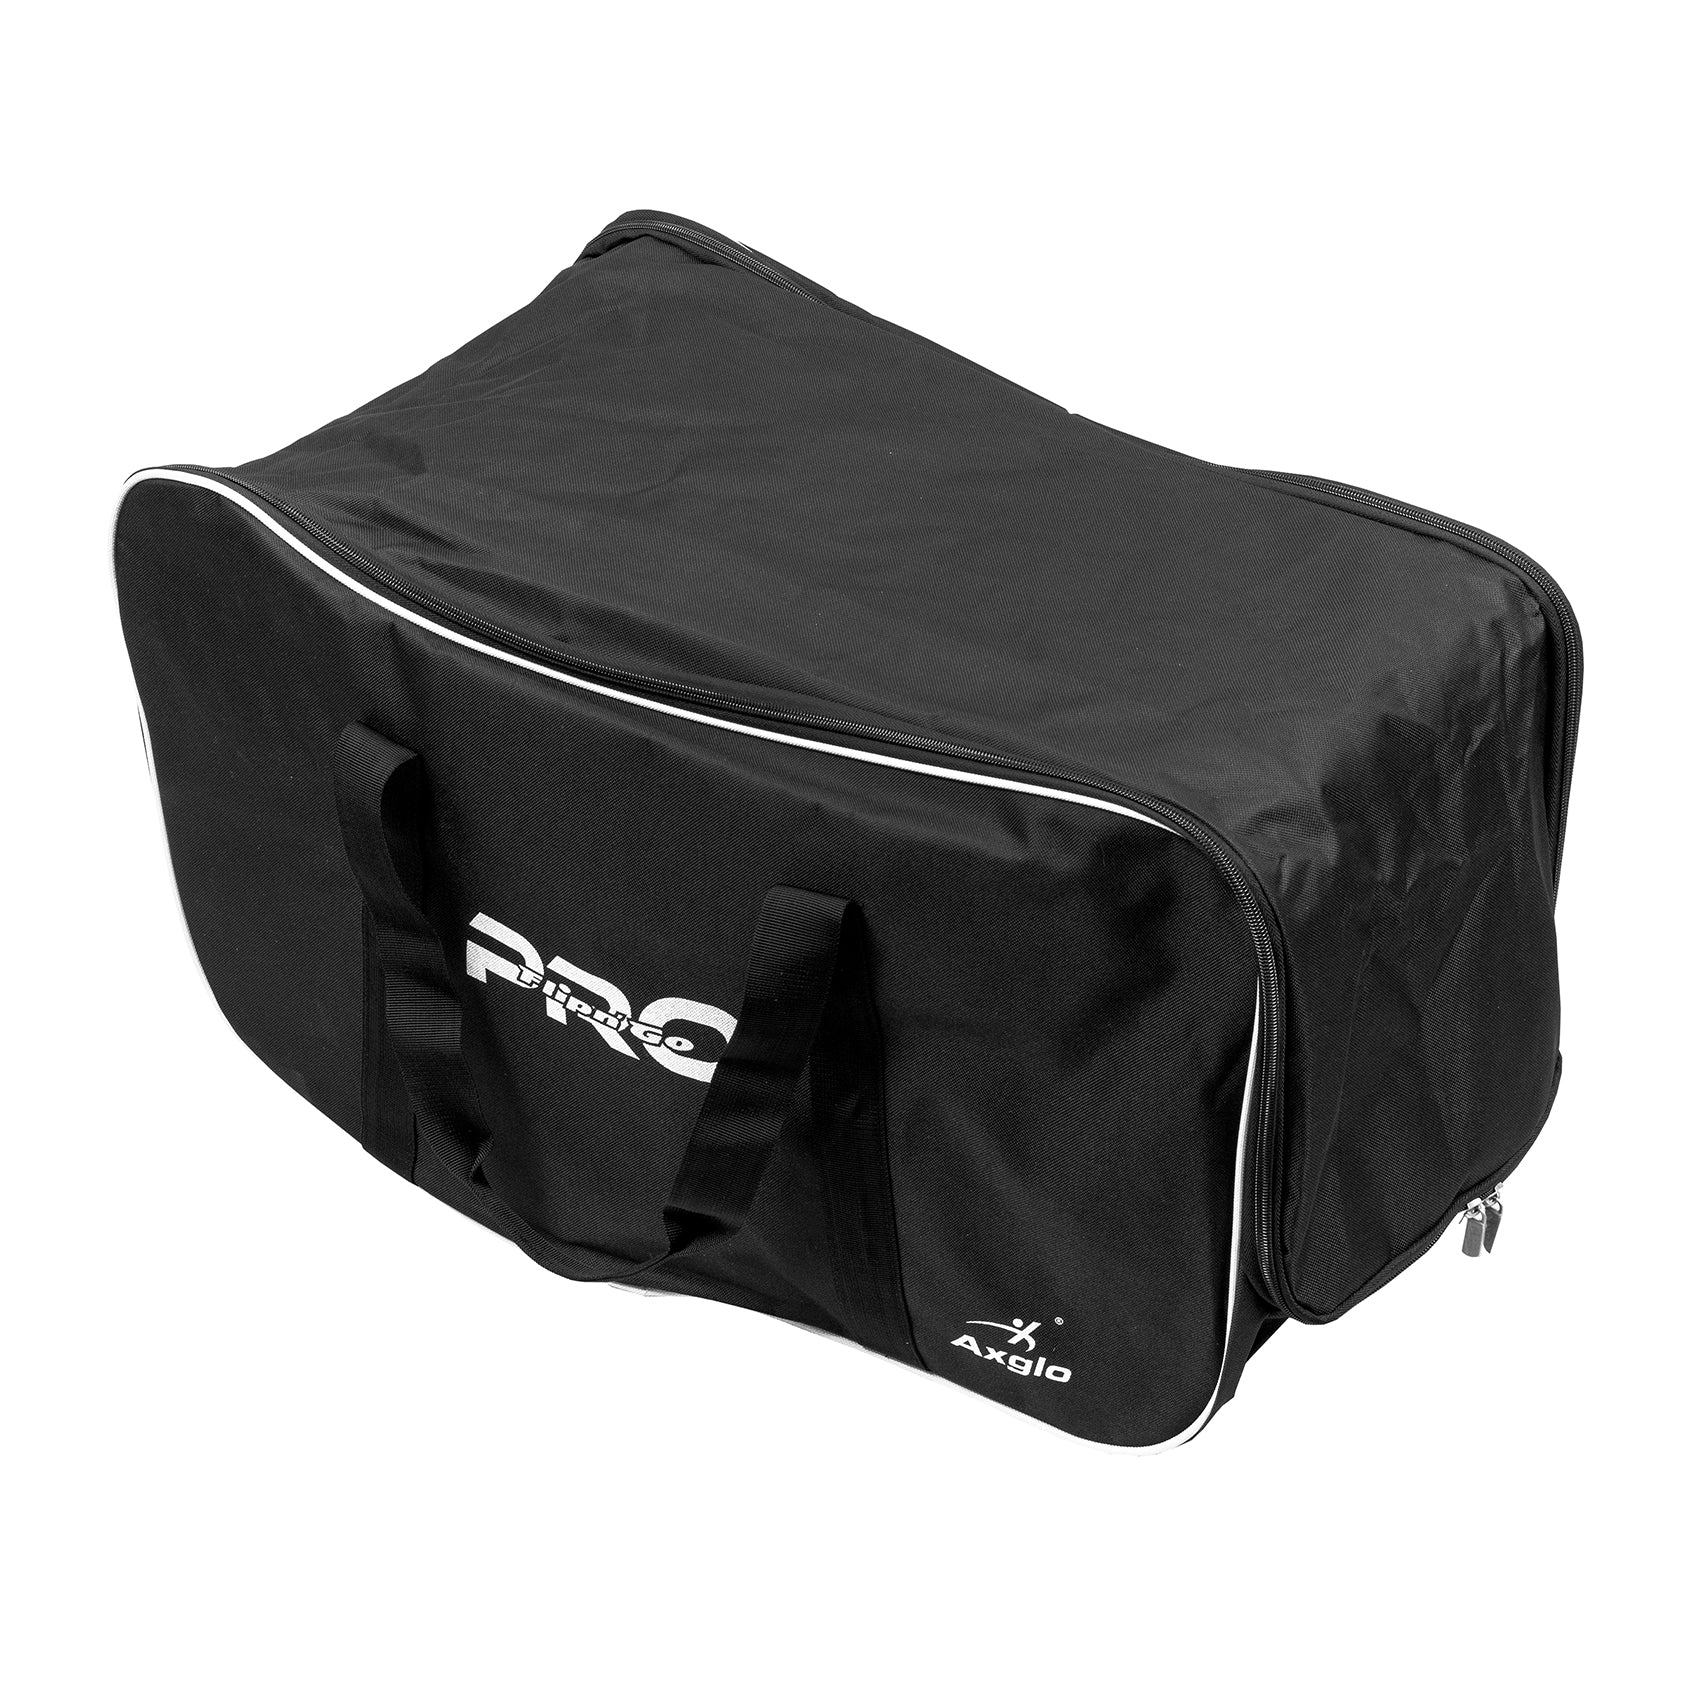 Axglo Flip n' Go Pro Golf Push Cart Storage Bag